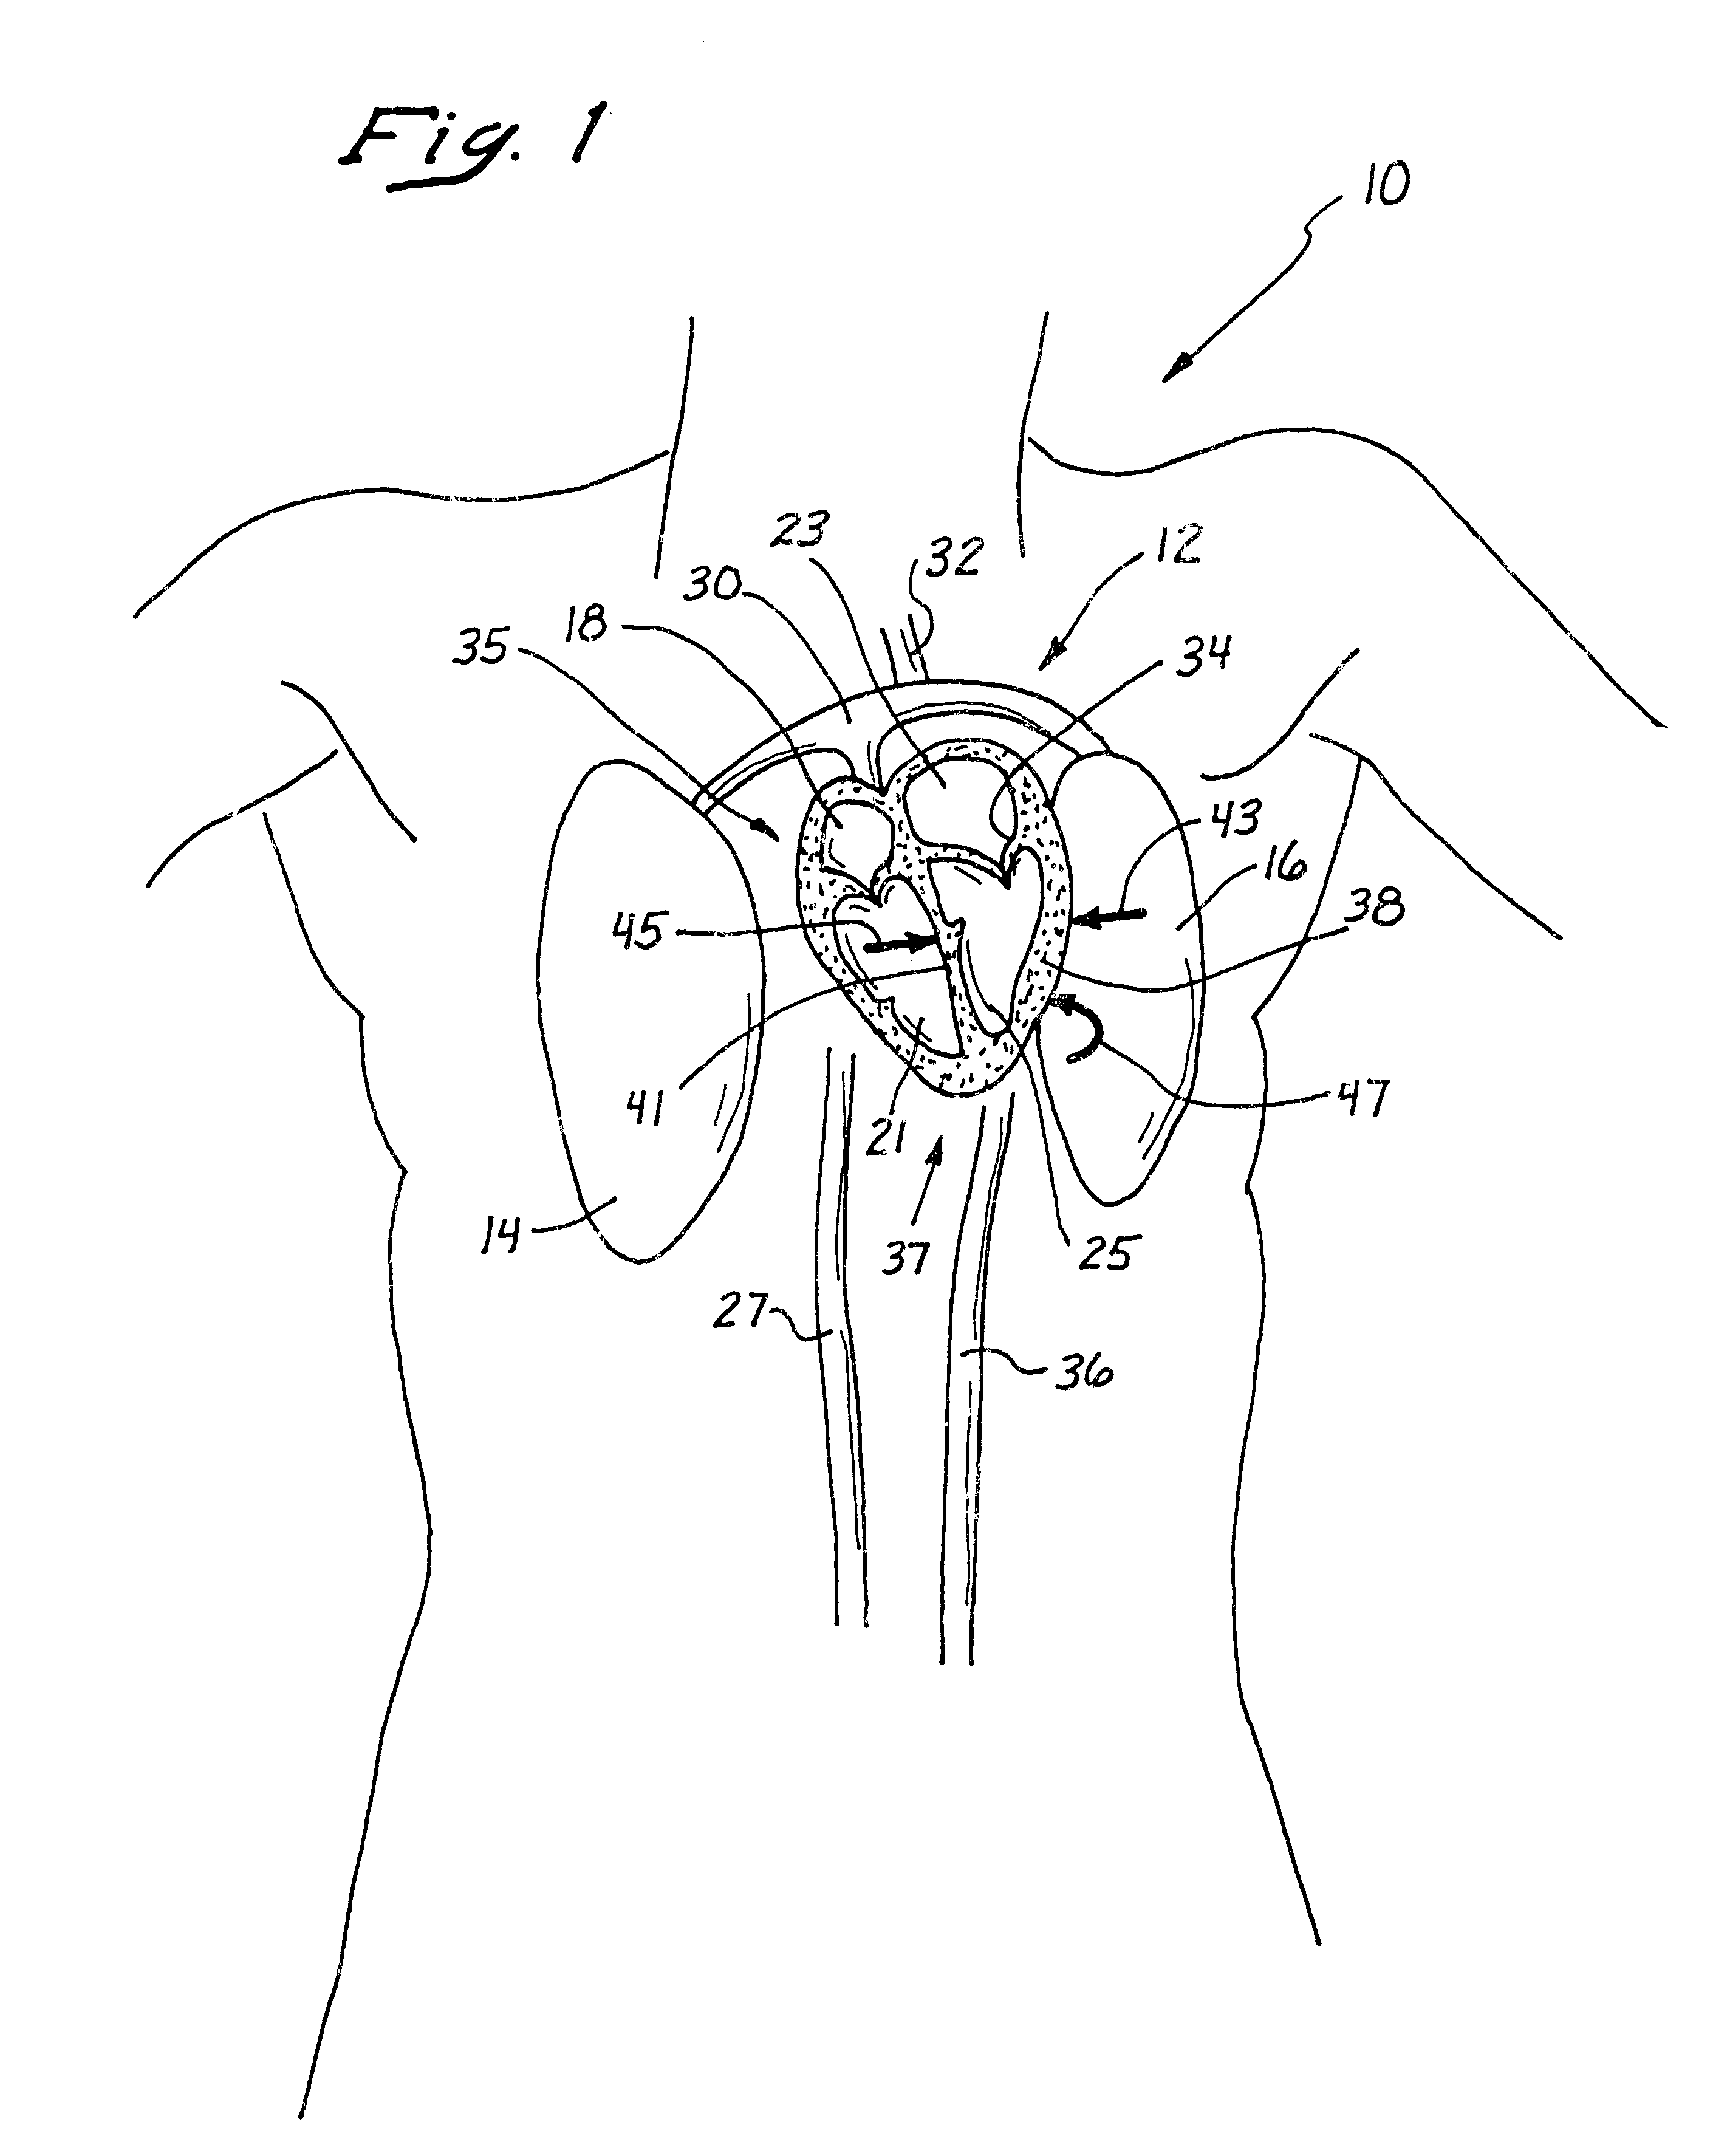 Anterior segment coronary restoration apparatus and method